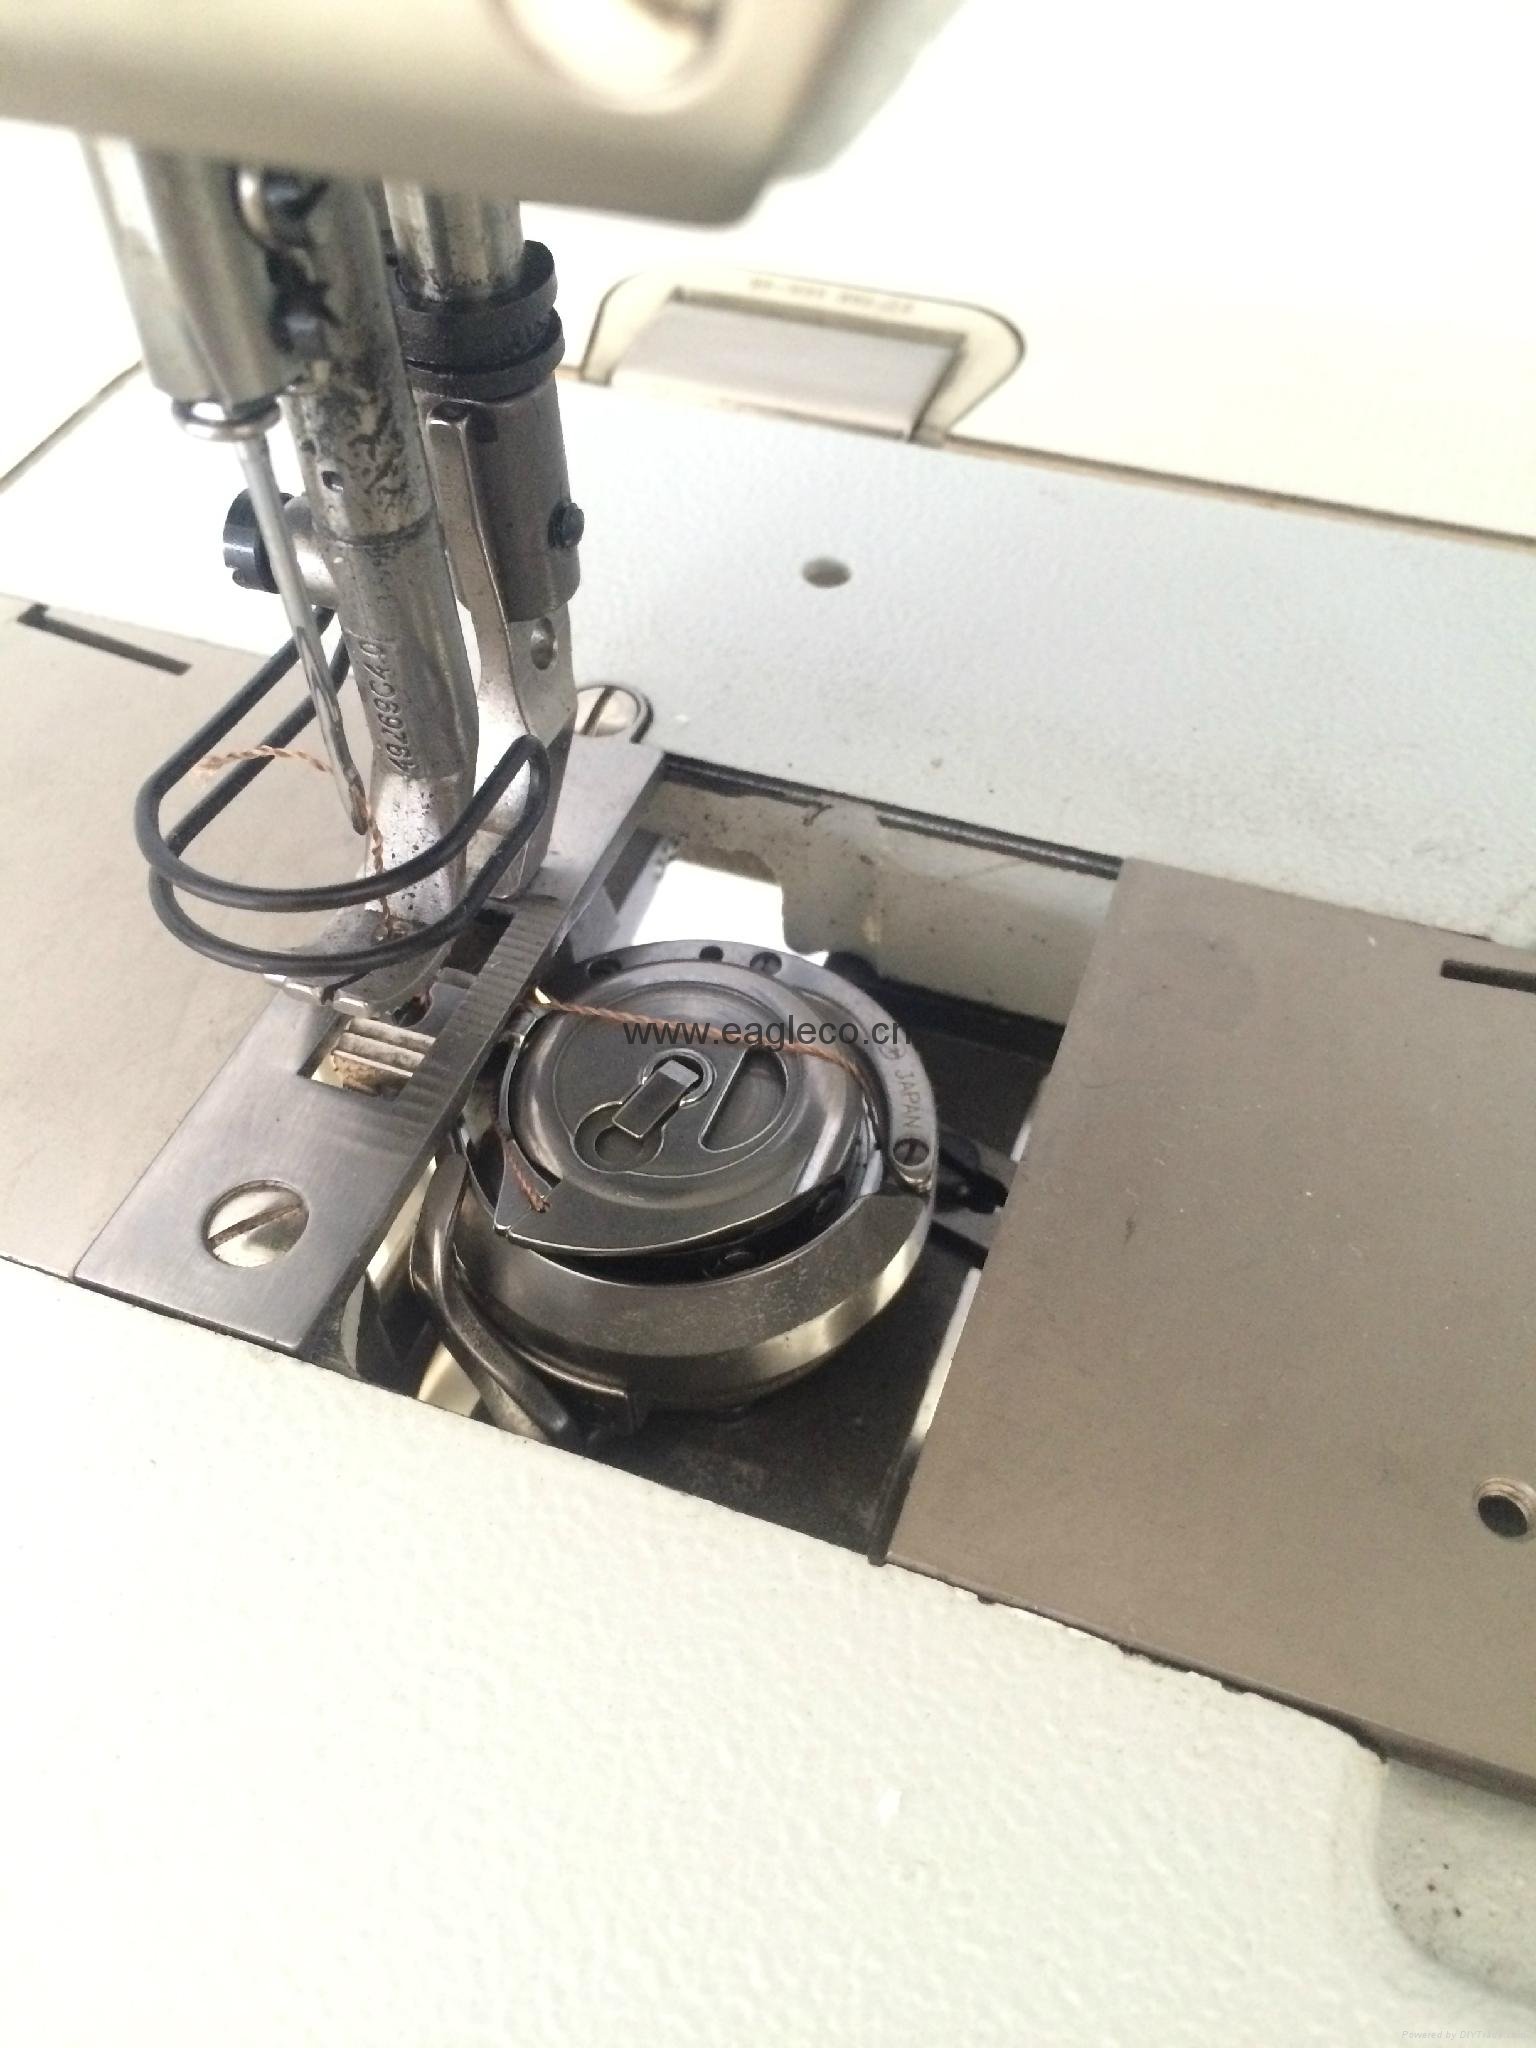 TOPAFF 1245-6/01 CLPMN single needle flat bed sewing machine 4